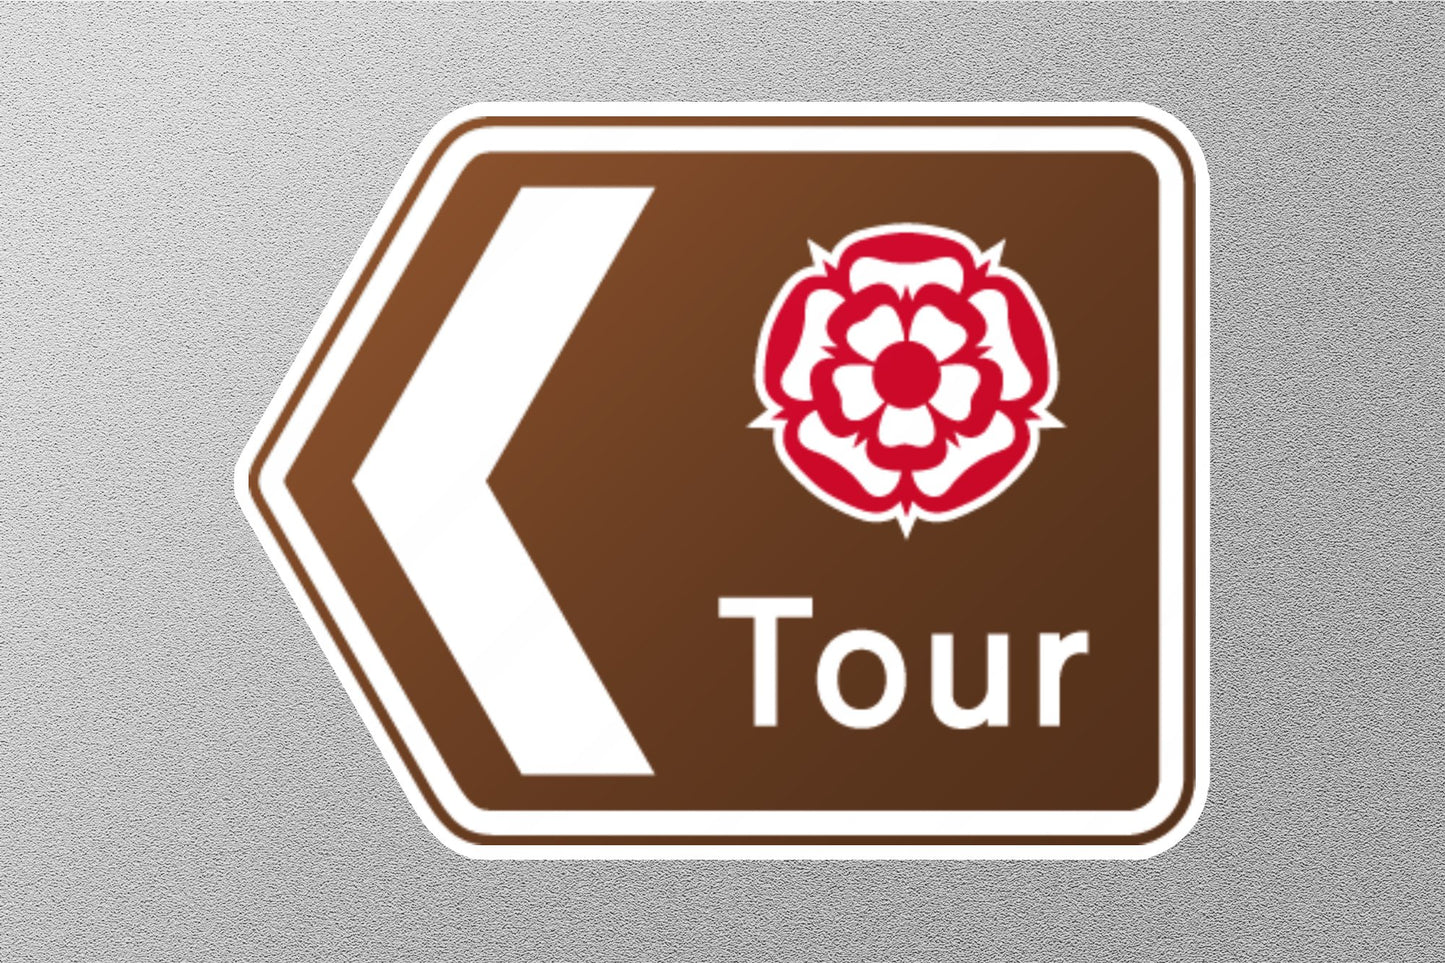 Tour UK Sign Sticker